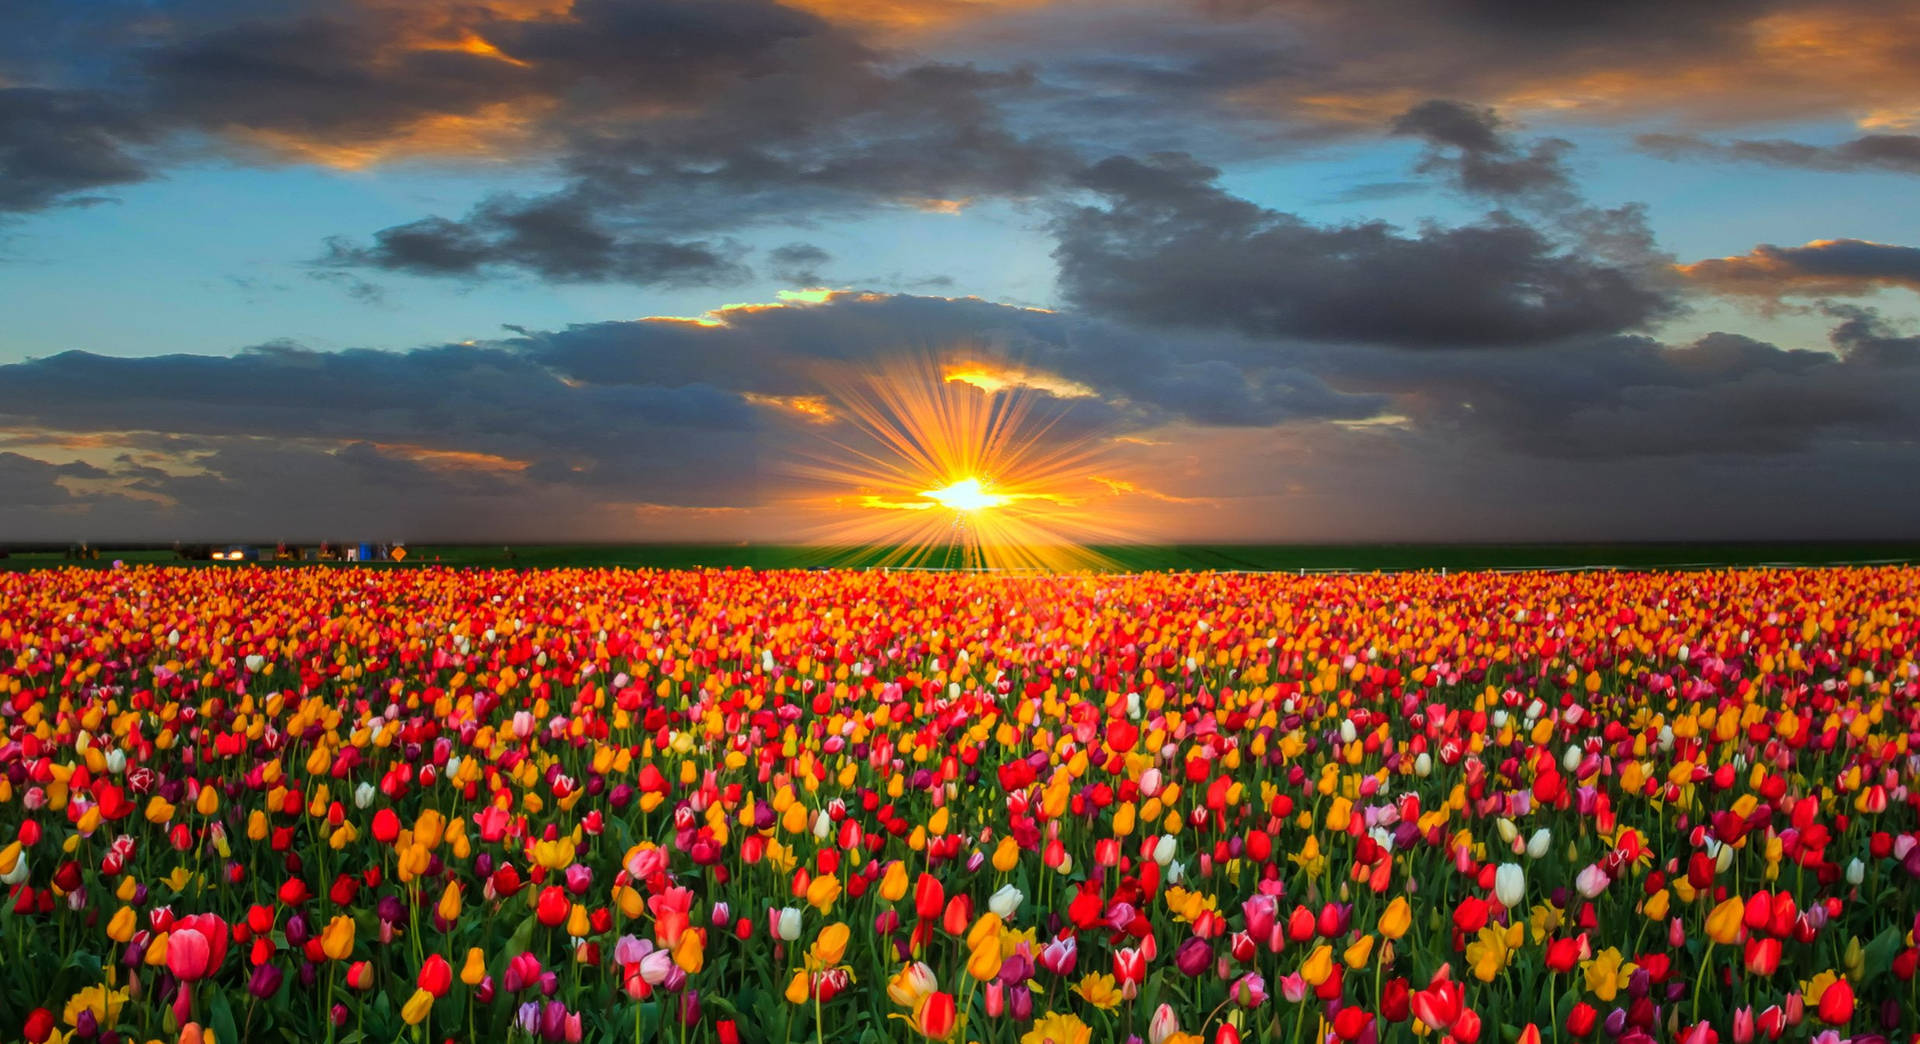 Caption: Vibrant Oregon Tulip Field